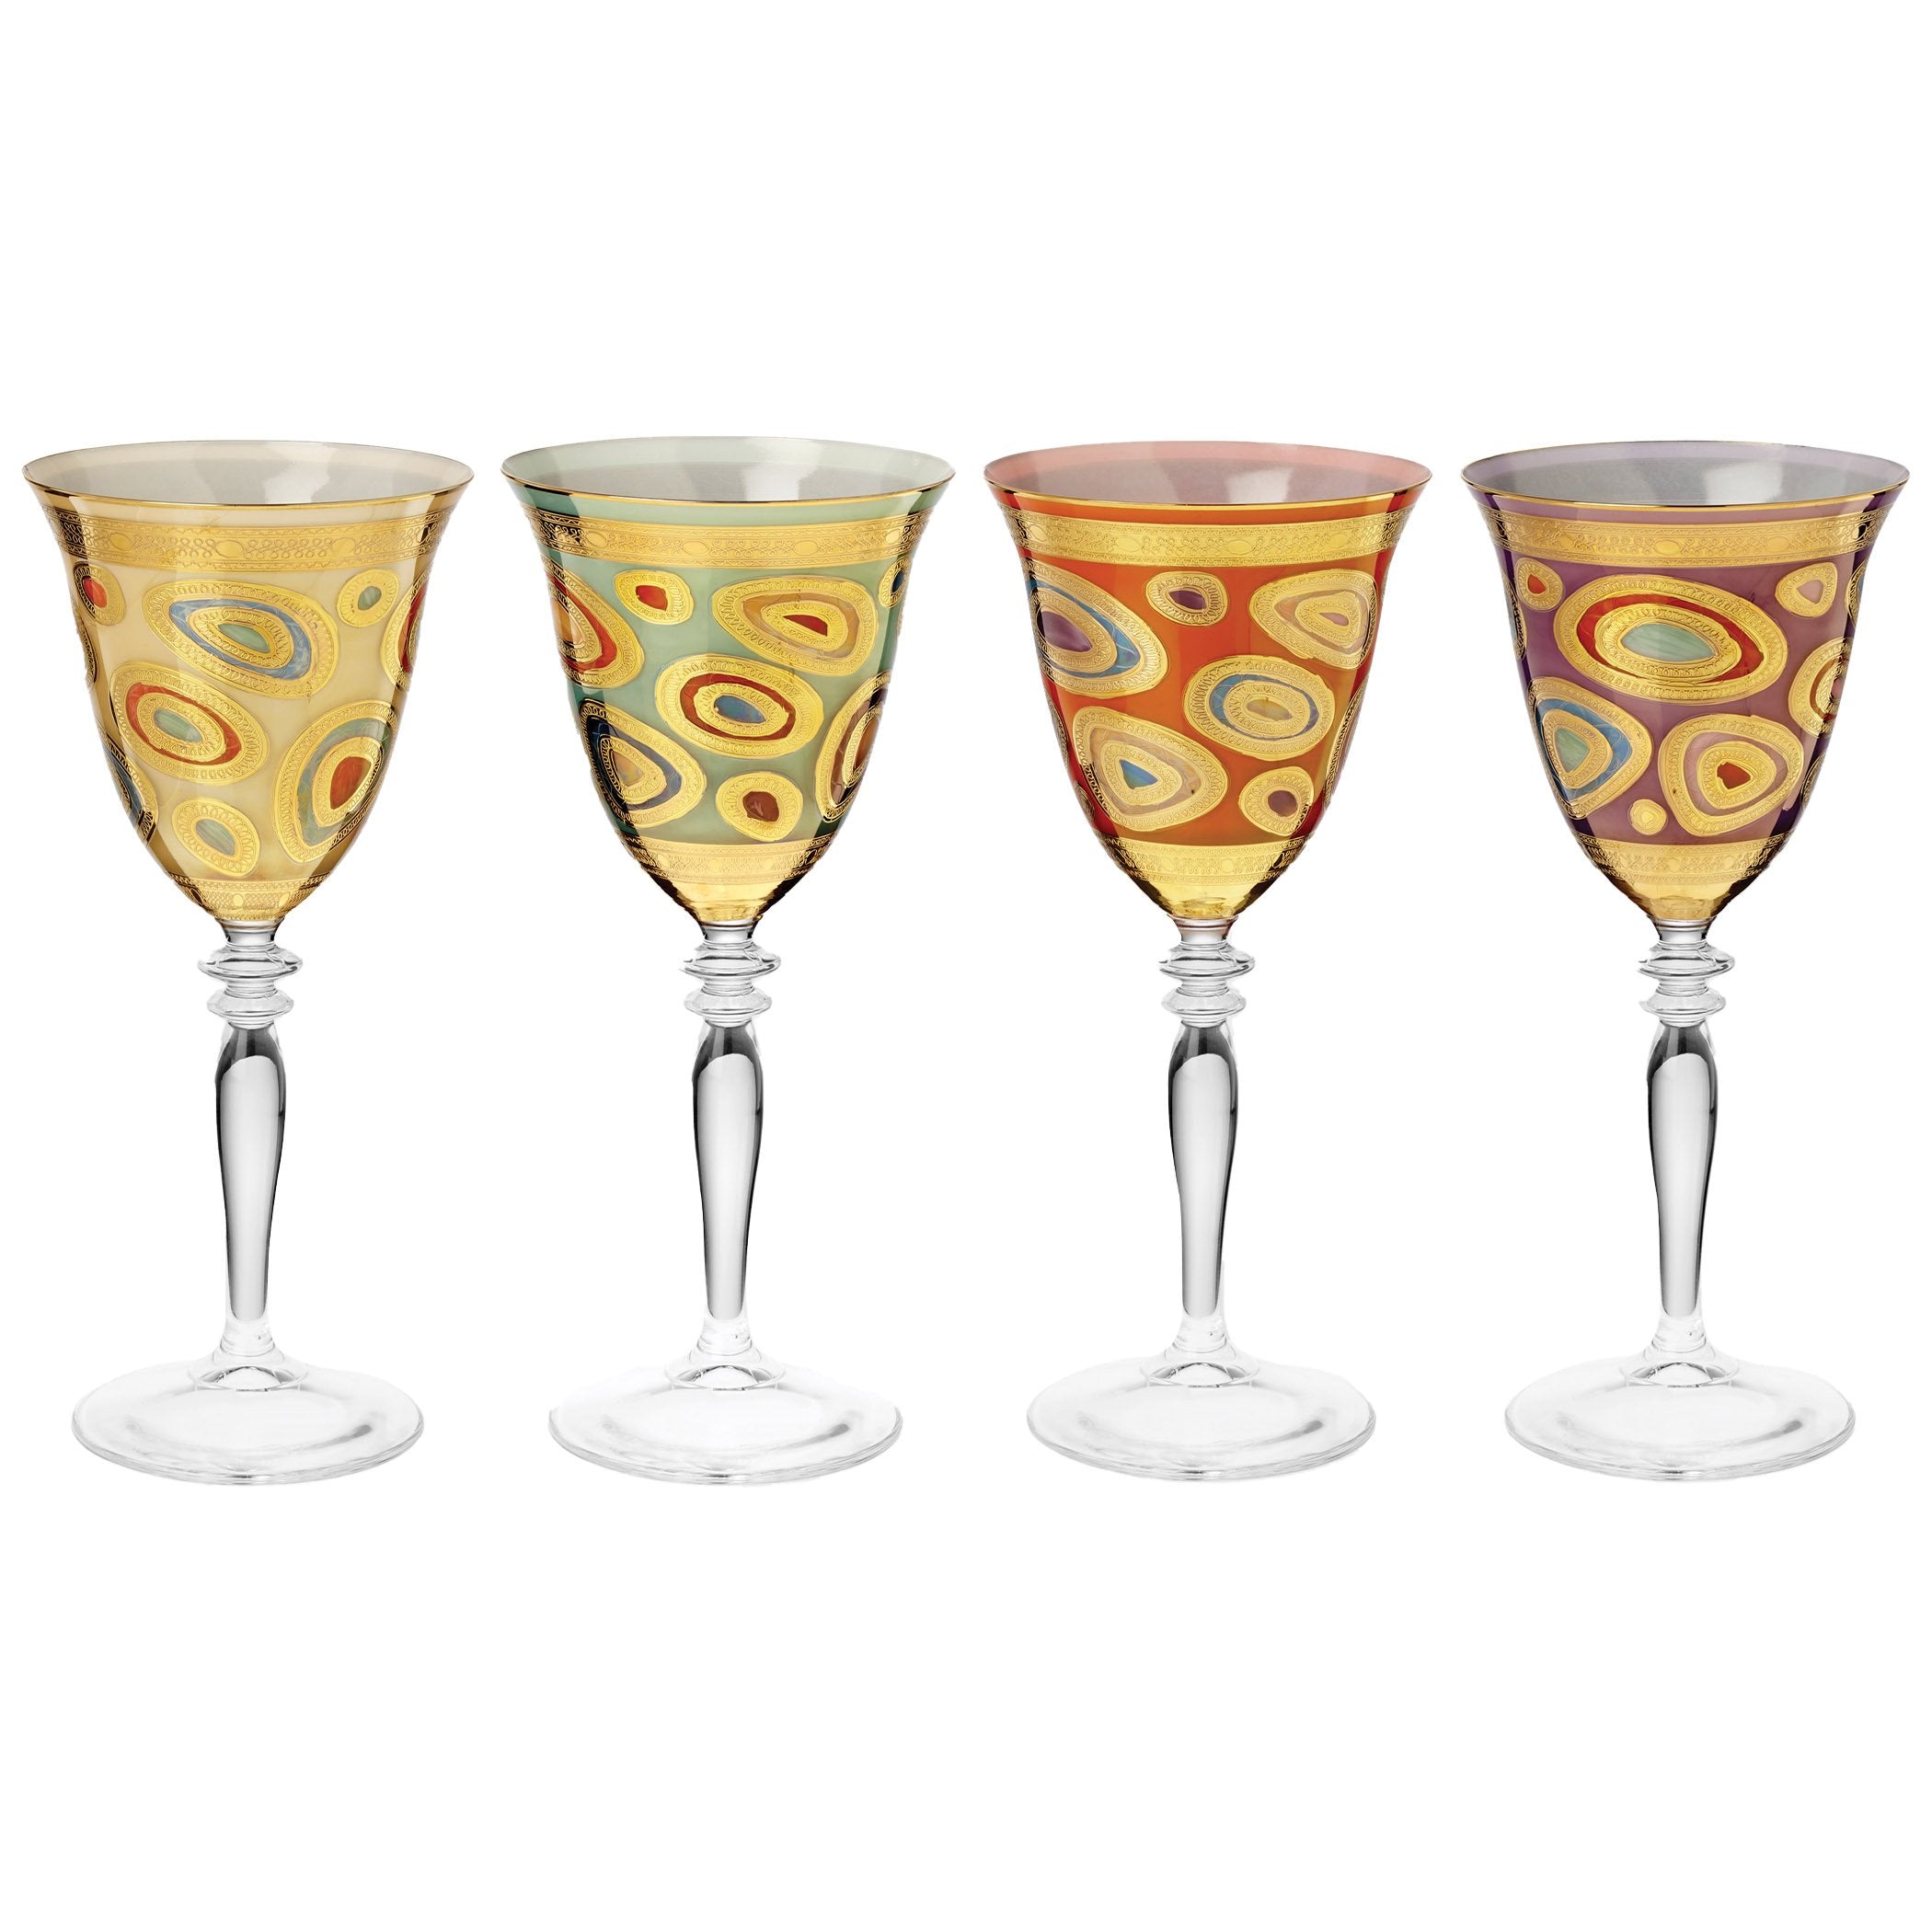 Regalia Assorted Wine Glasses - Set of 4